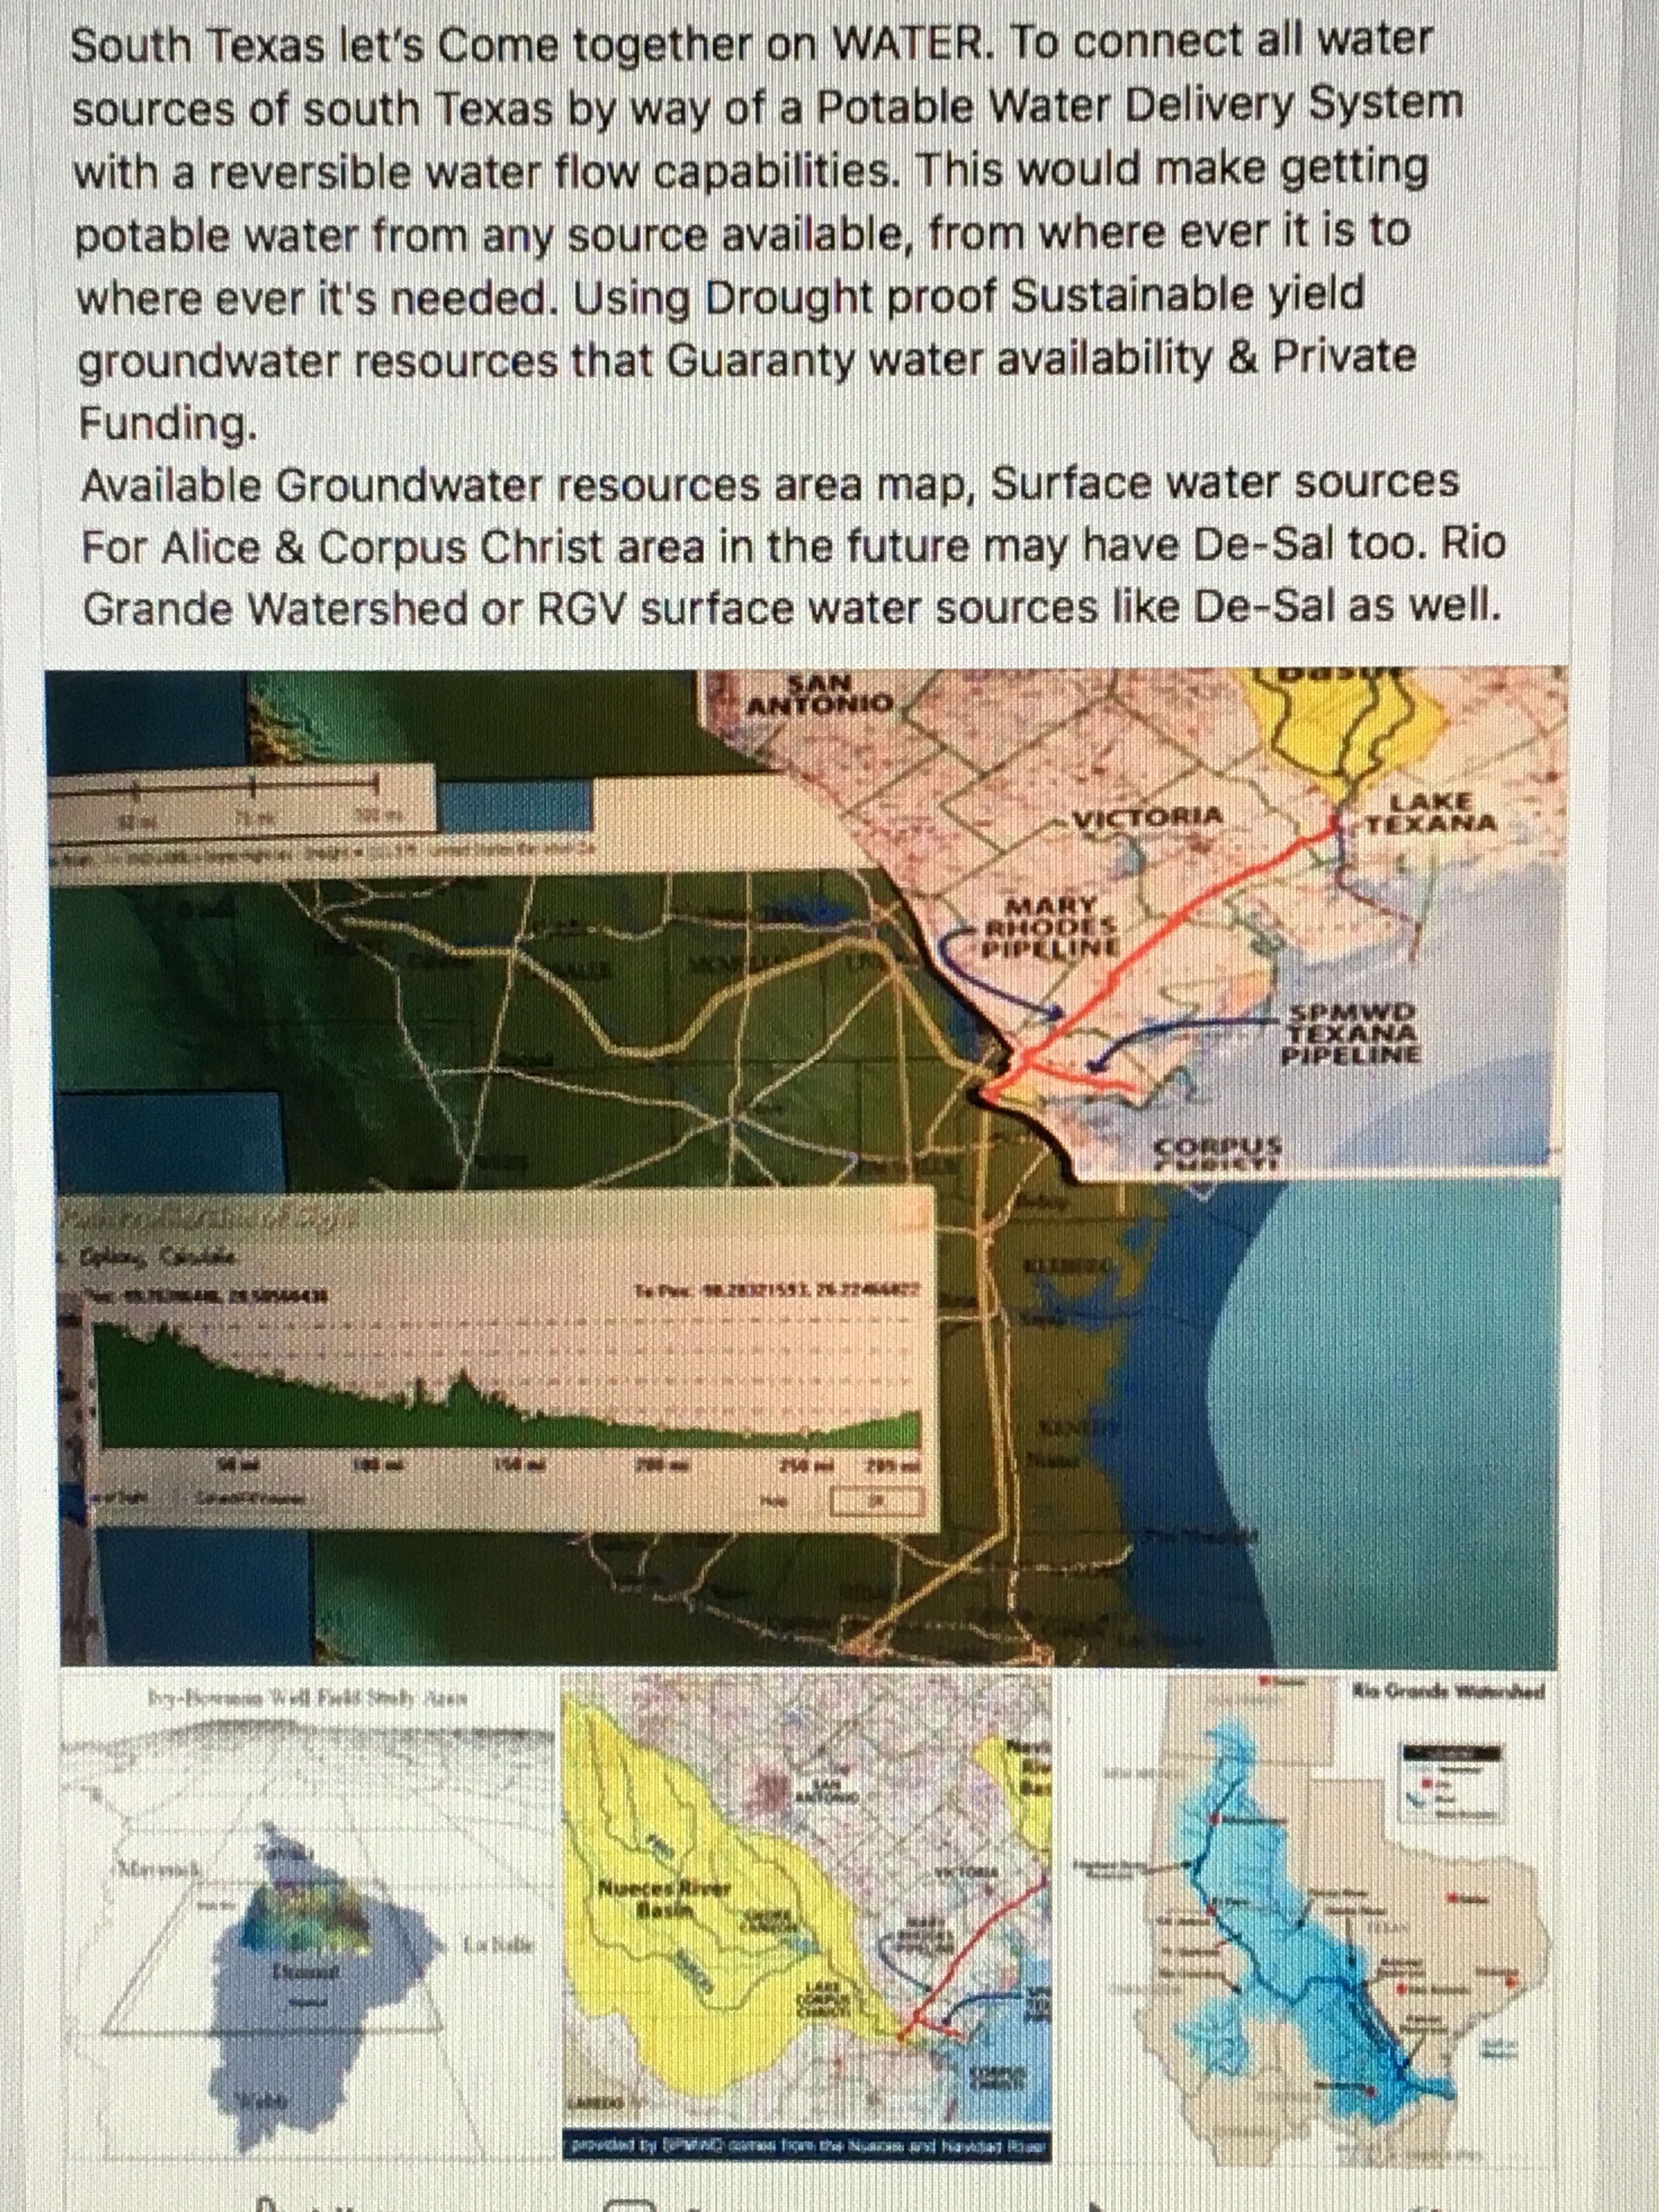 https://www.facebook.com/South-Texas-Water-Sharing-Pipeline-LLC-132720470888042/